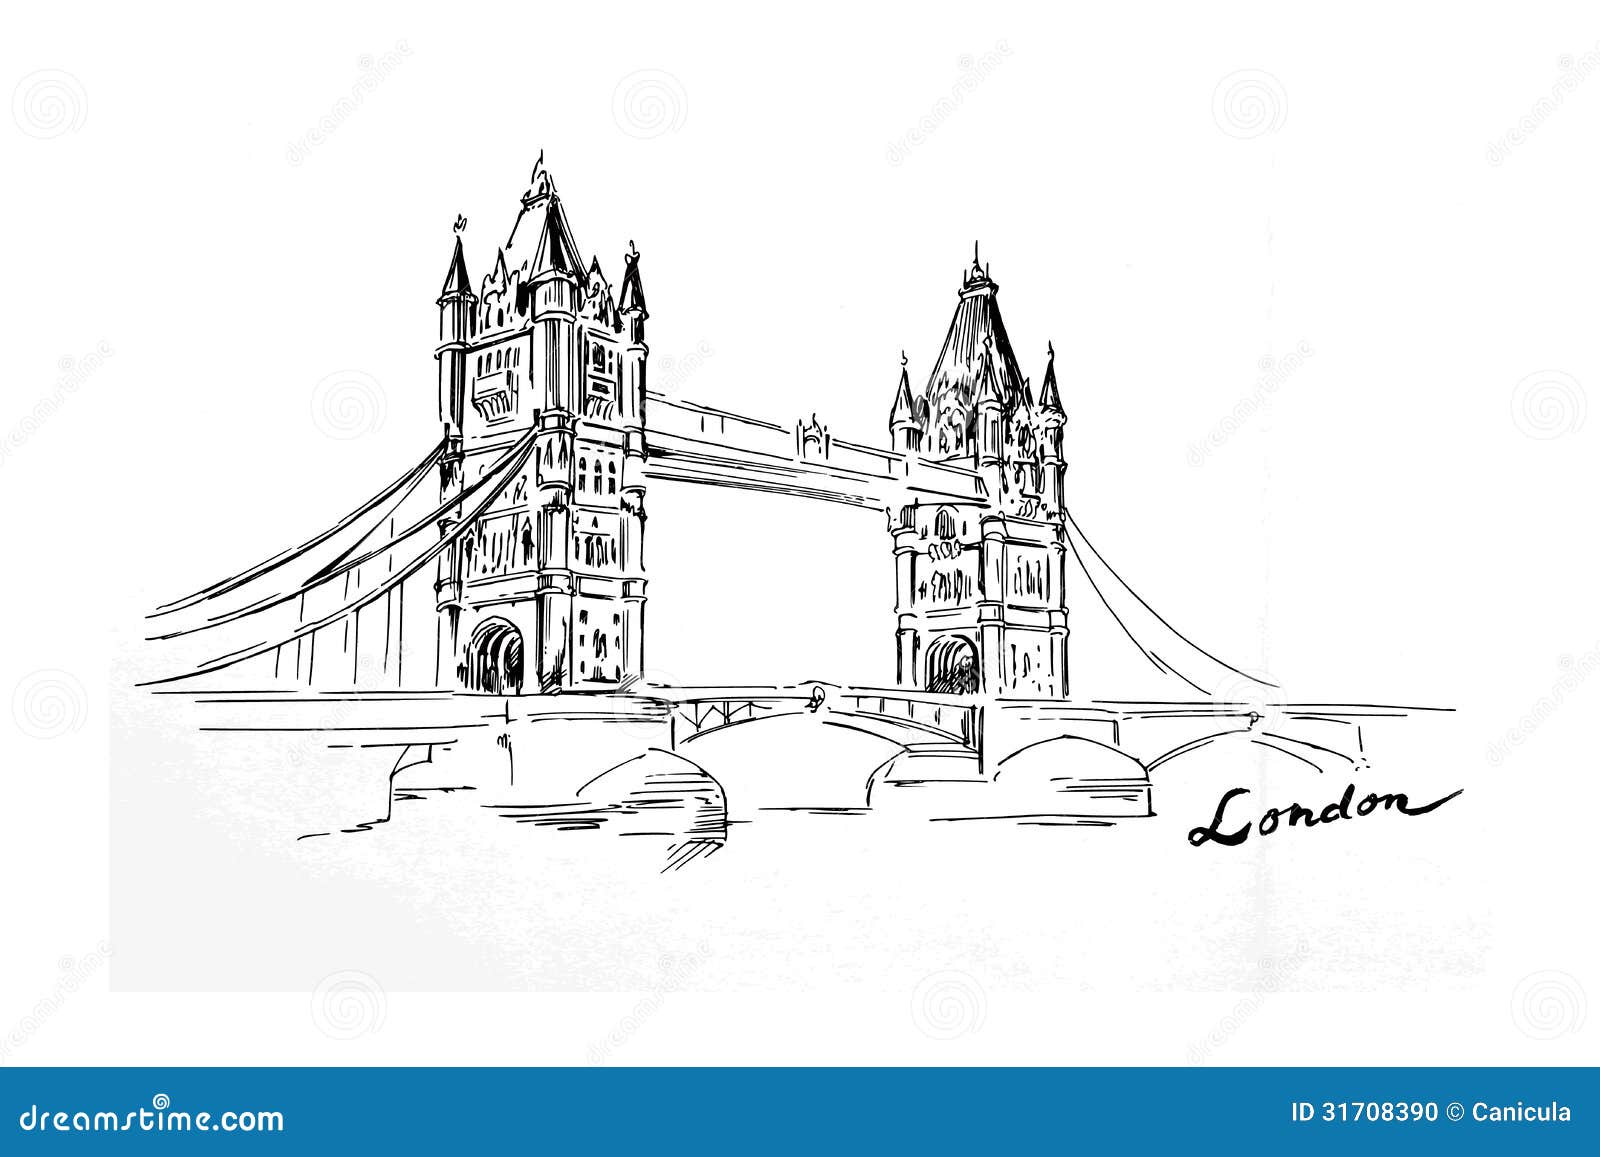 London bridge stock vector. Illustration of architecture - 31708390